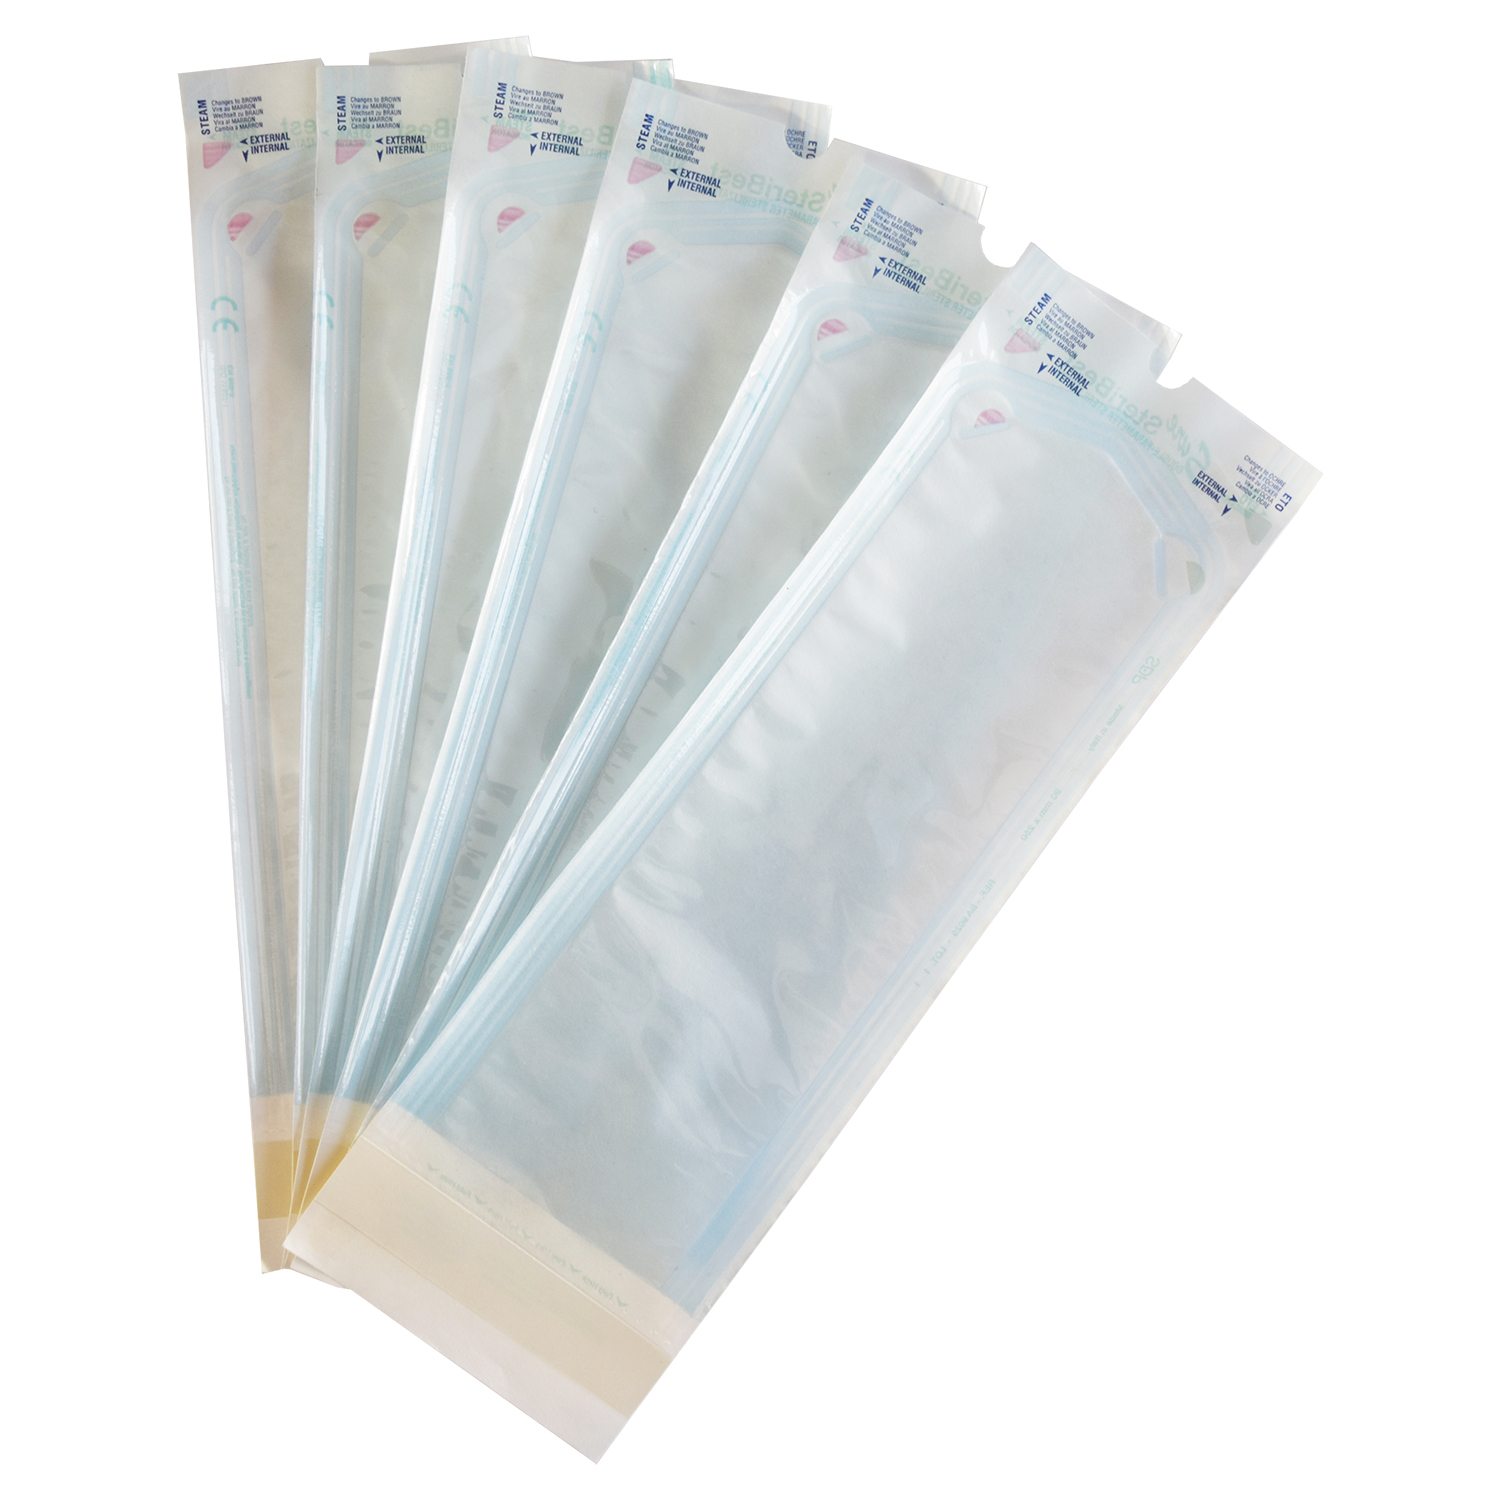 NITRAS® Medical Sterilisationsbeutel mit Dampf- und EO-Gasindikator, selbstklebend